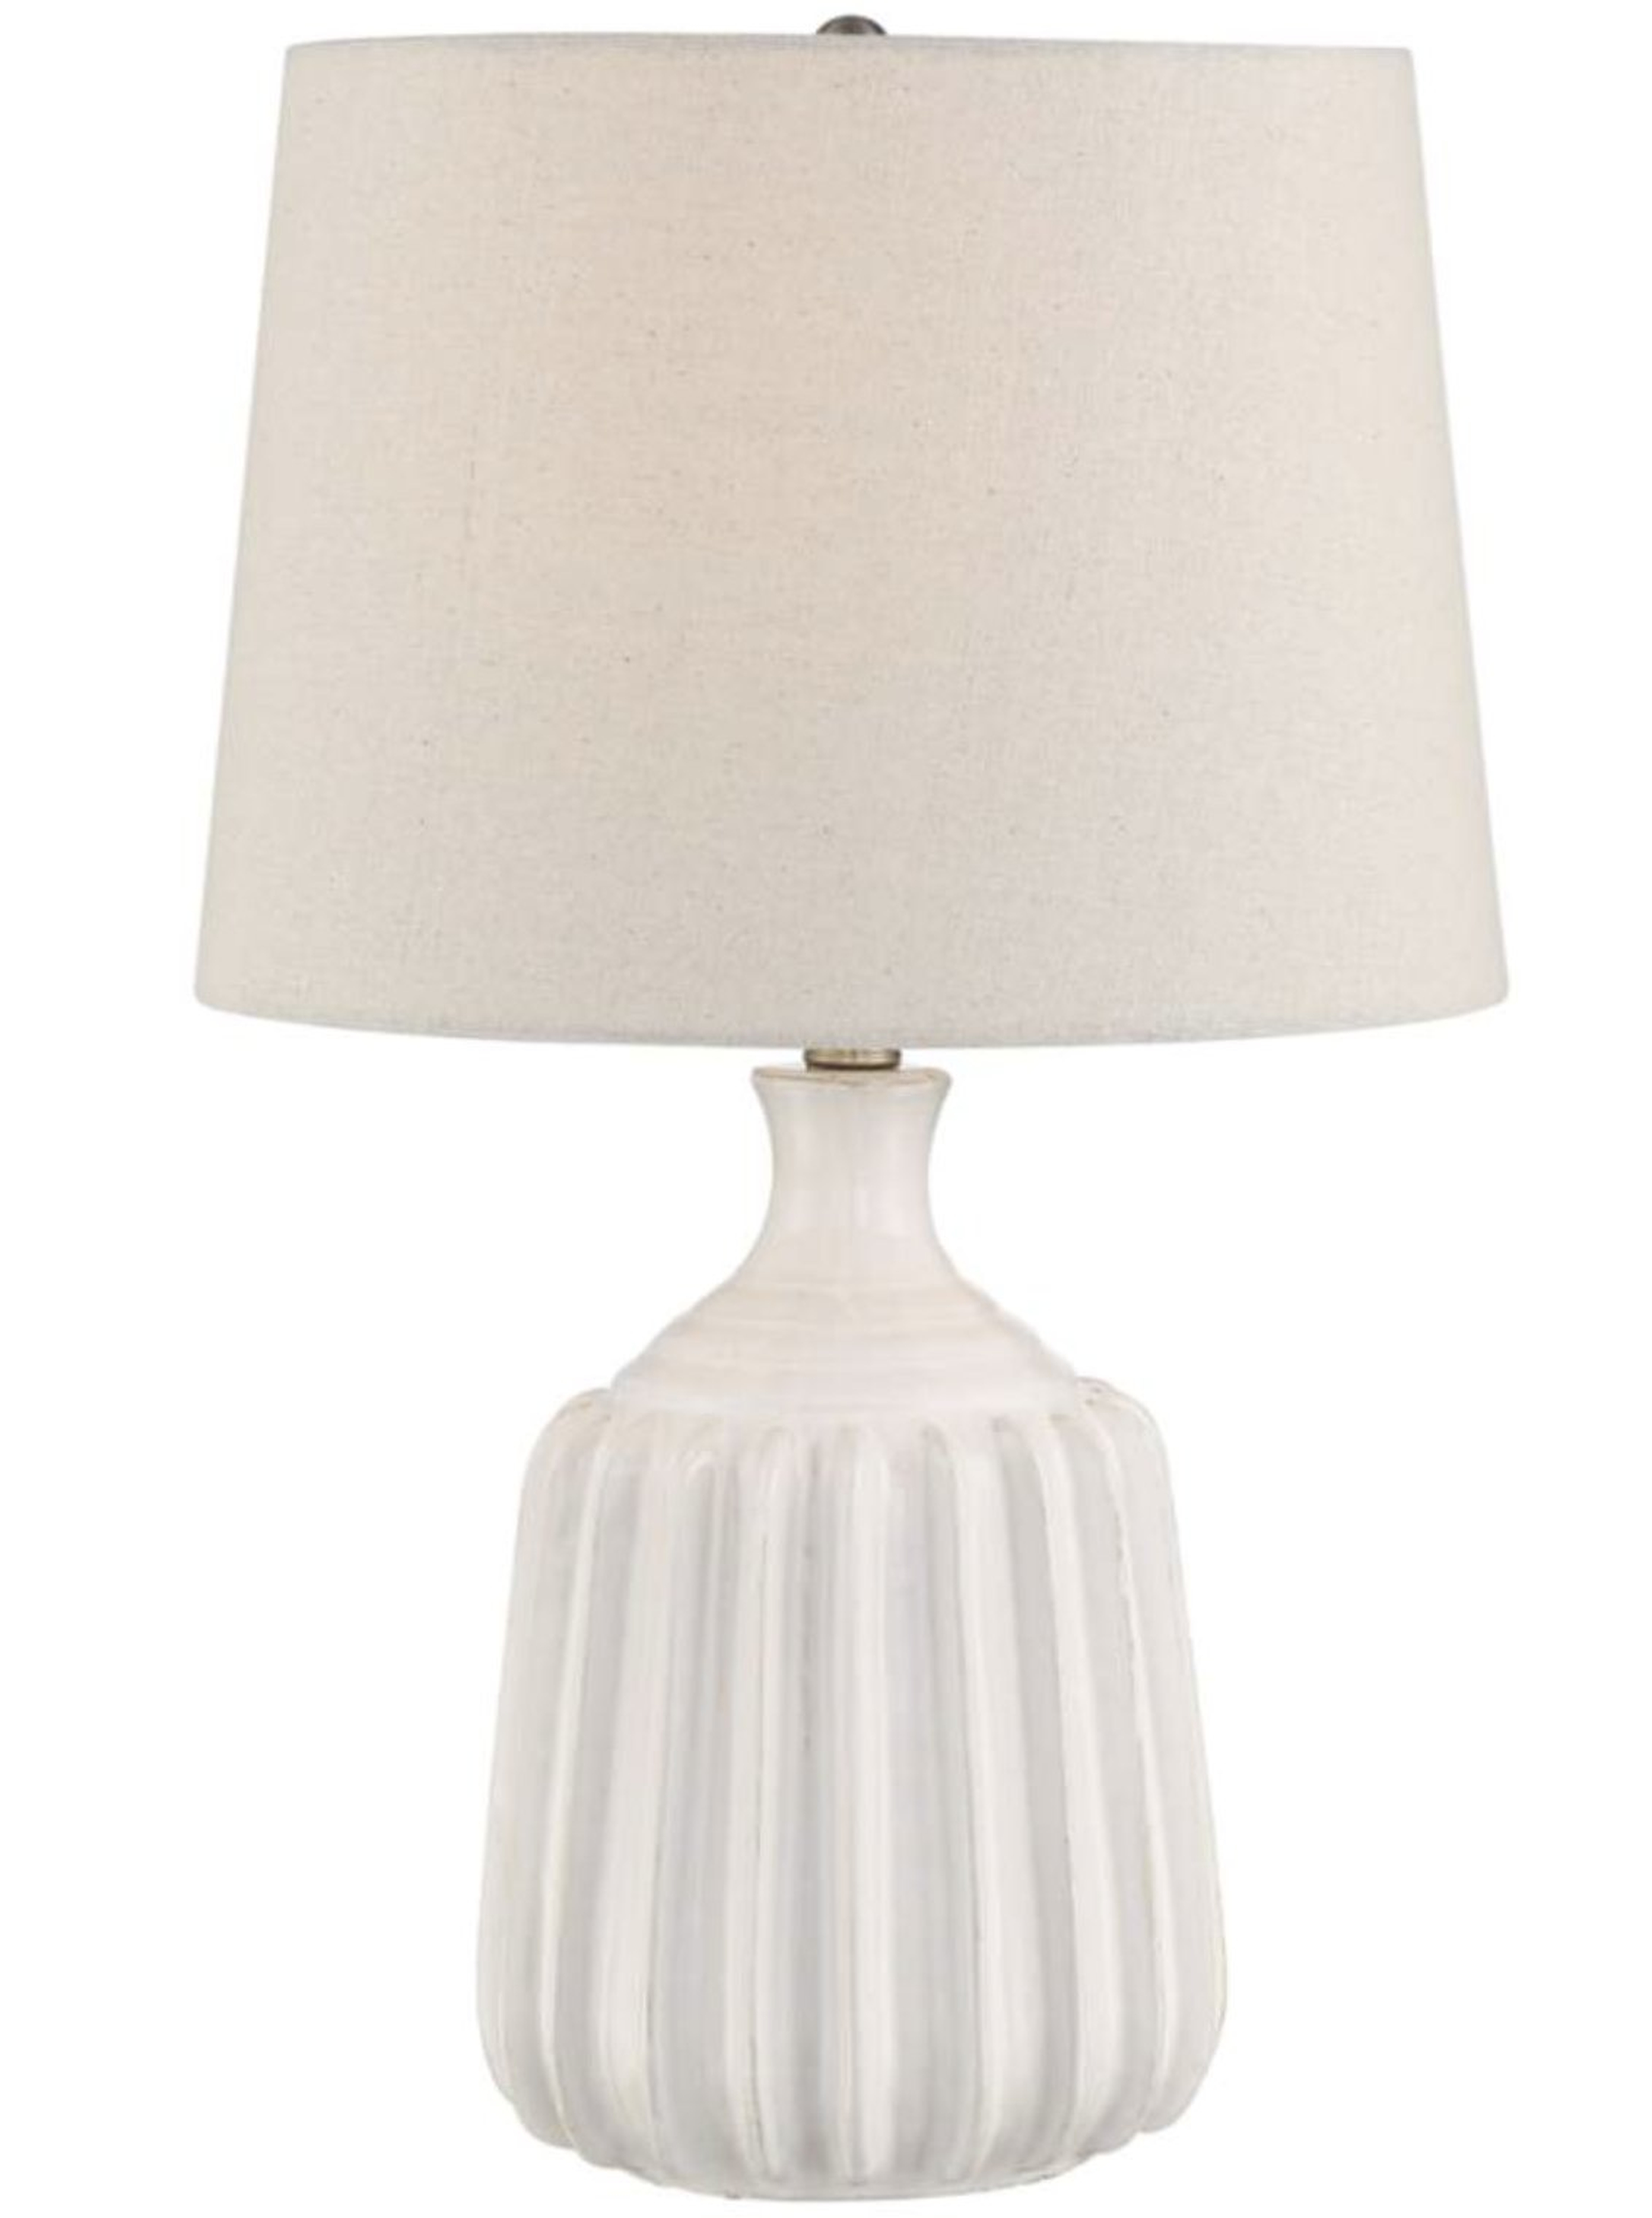 Logan Ribbed Ceramic Modern Table Lamp by 360 Lighting - Lamps Plus